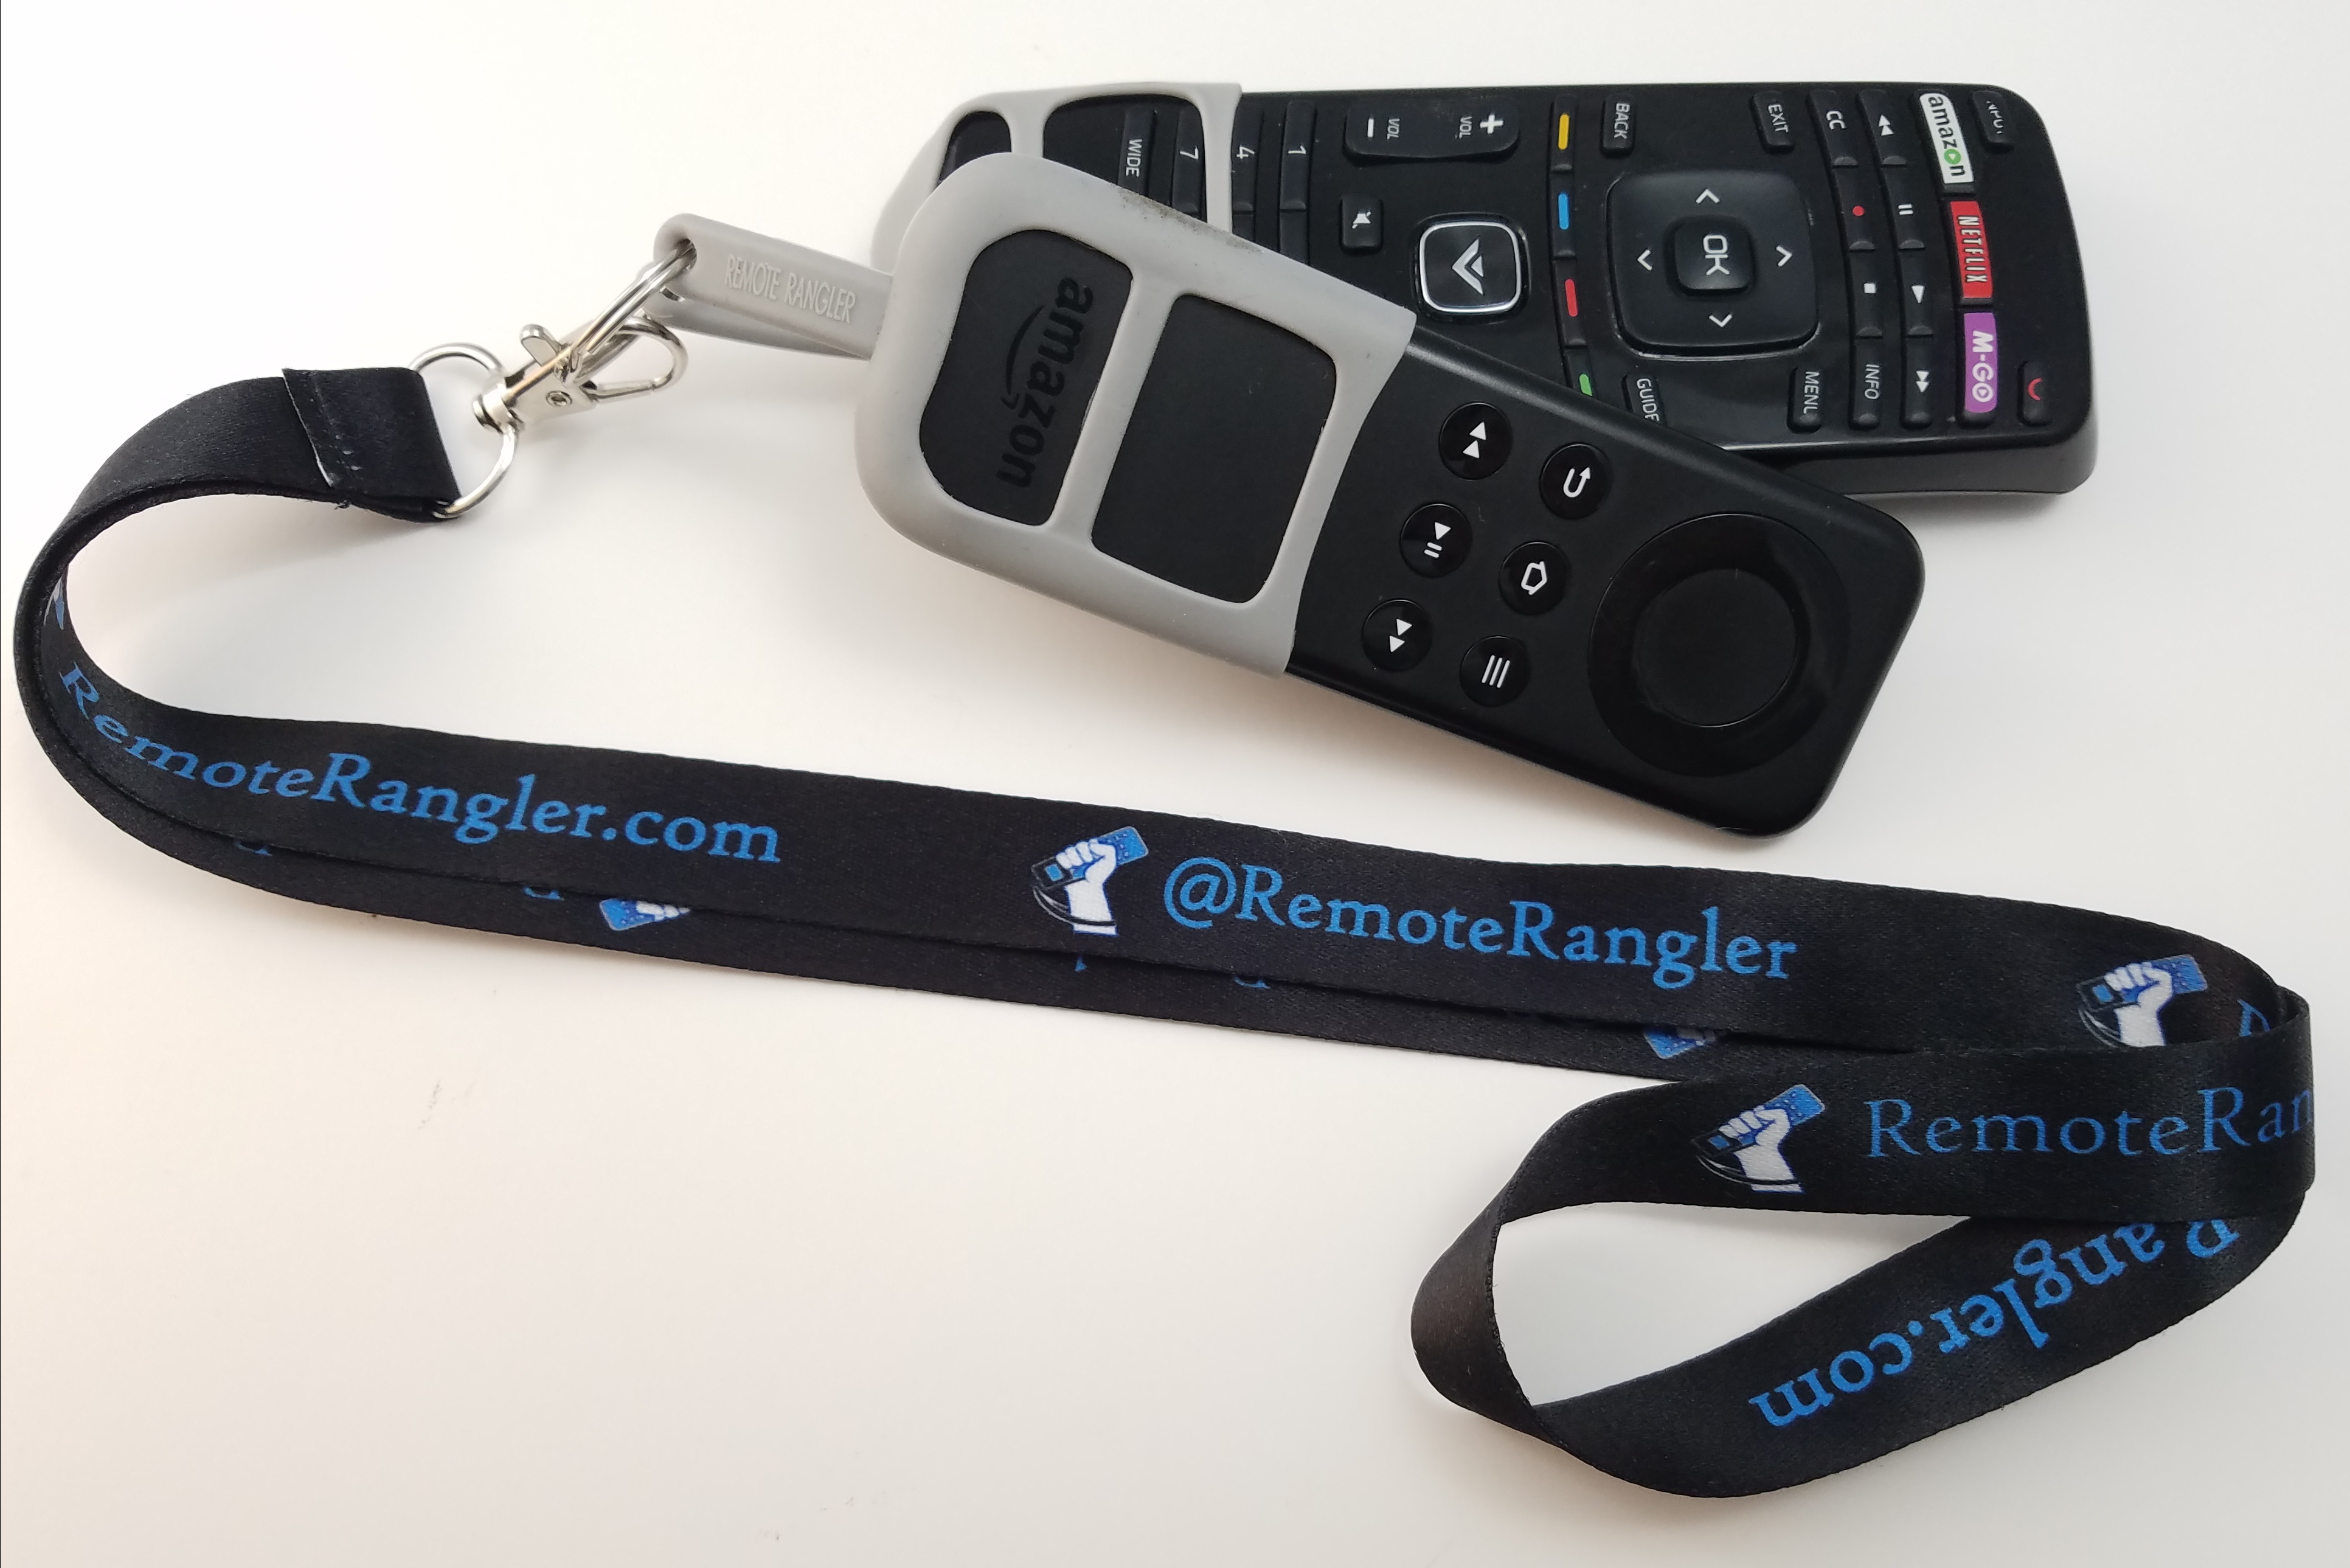 Portable Remote Holders - Remote Rangler - Universal - Stop Losing